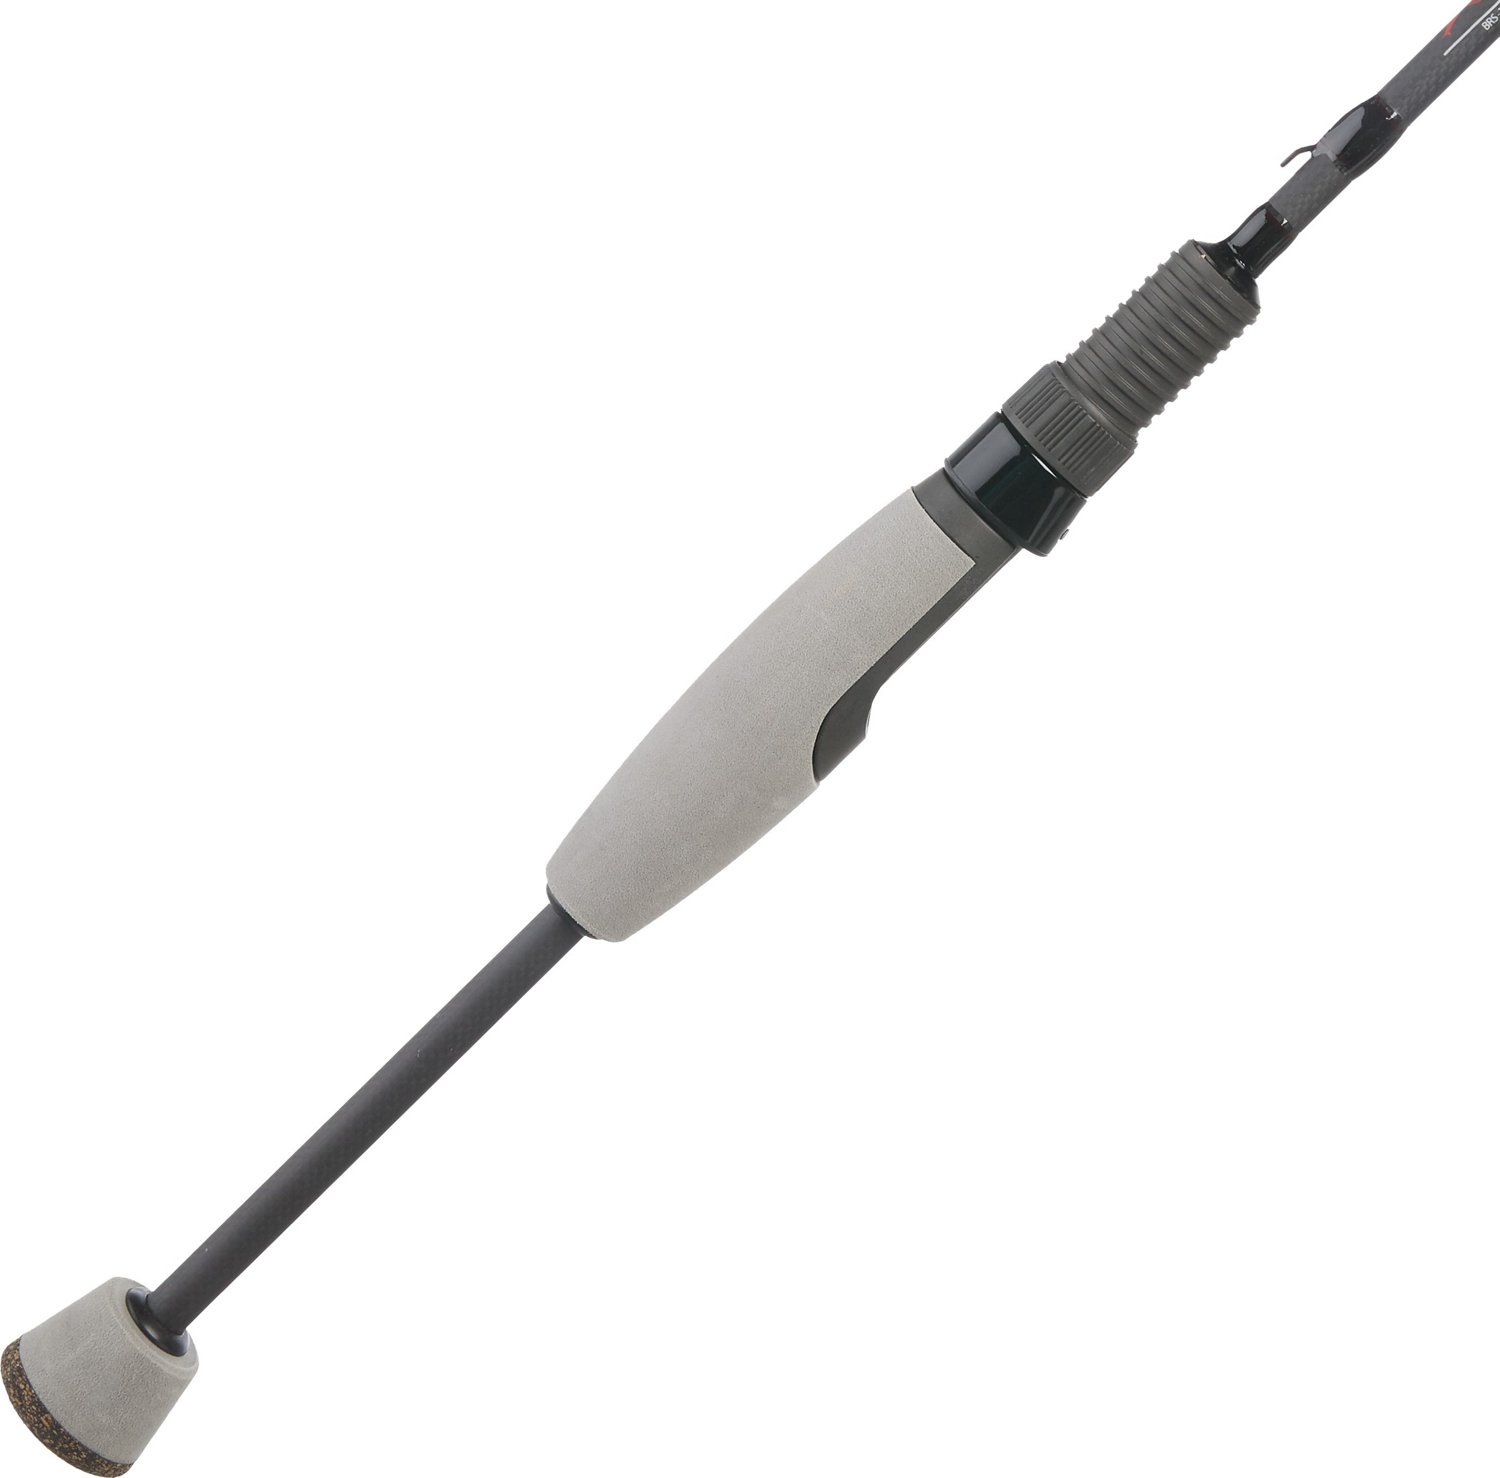 Falcon Coastal 6'8 Saltwater Casting Rod